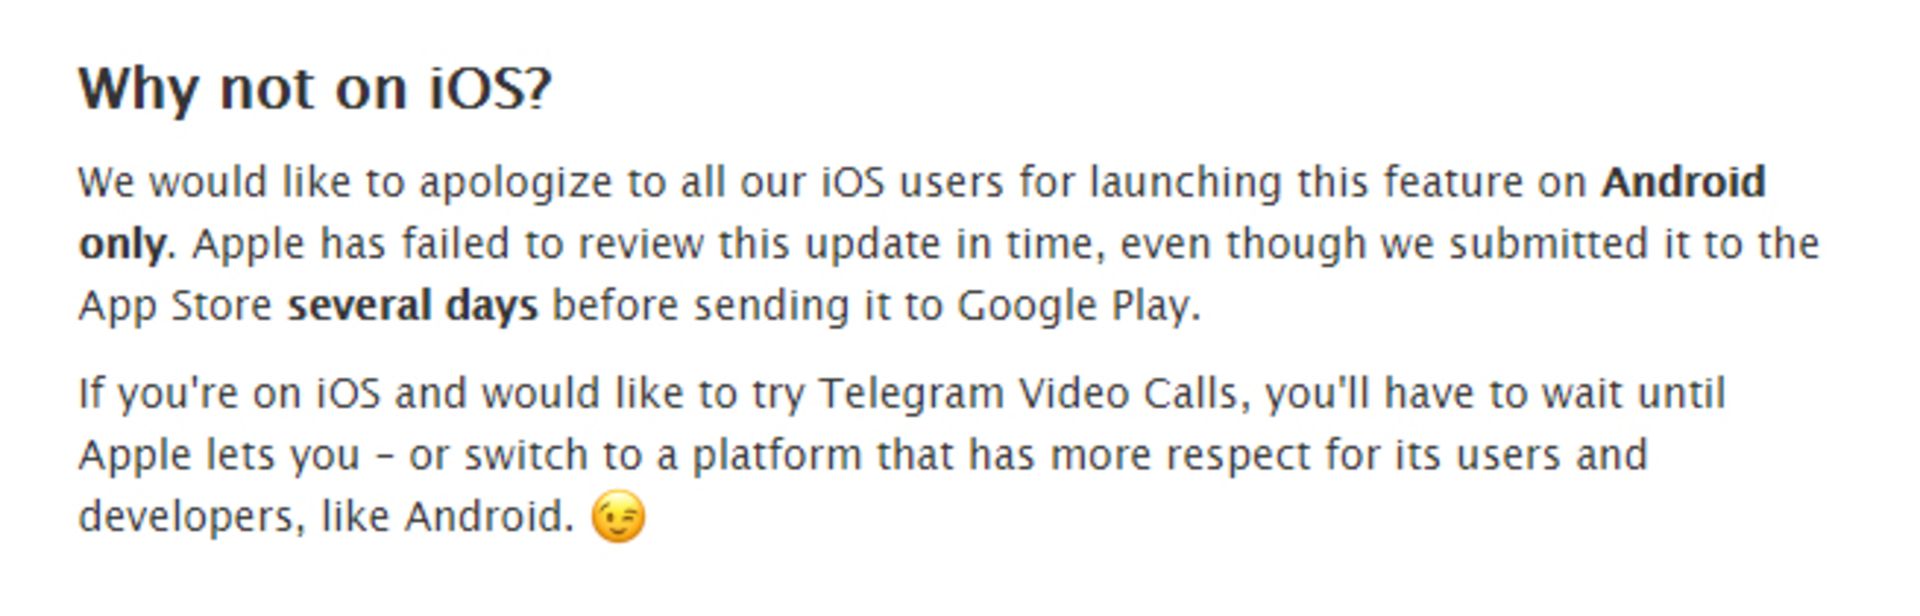 مرجع متخصصين ايران امكان تماس تصويري تلگرام - پست بلاگ تلگرام در مورد iOS